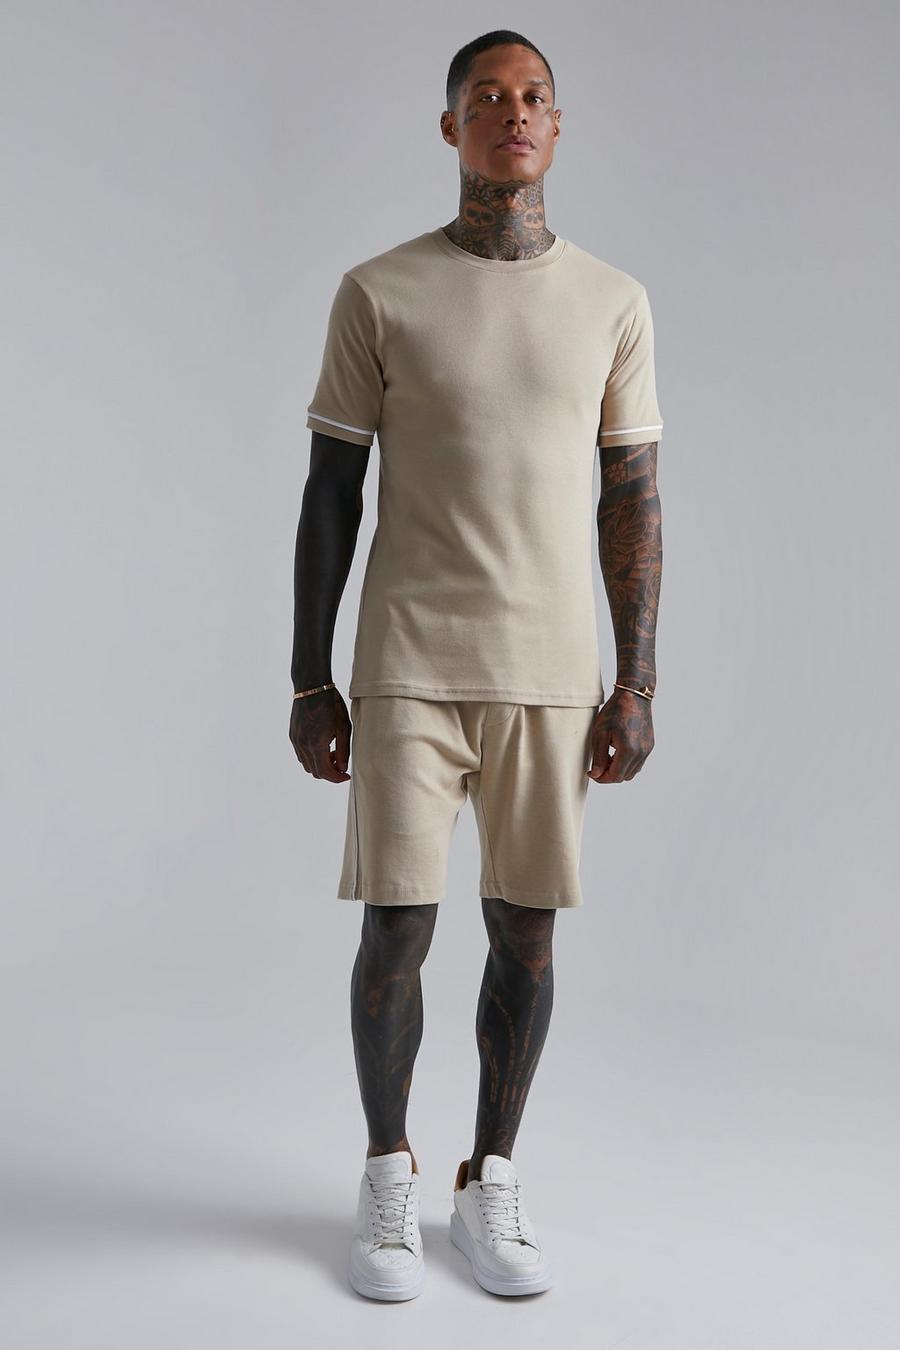 Sand beige T-shirt i muscle fit och shorts med kantband